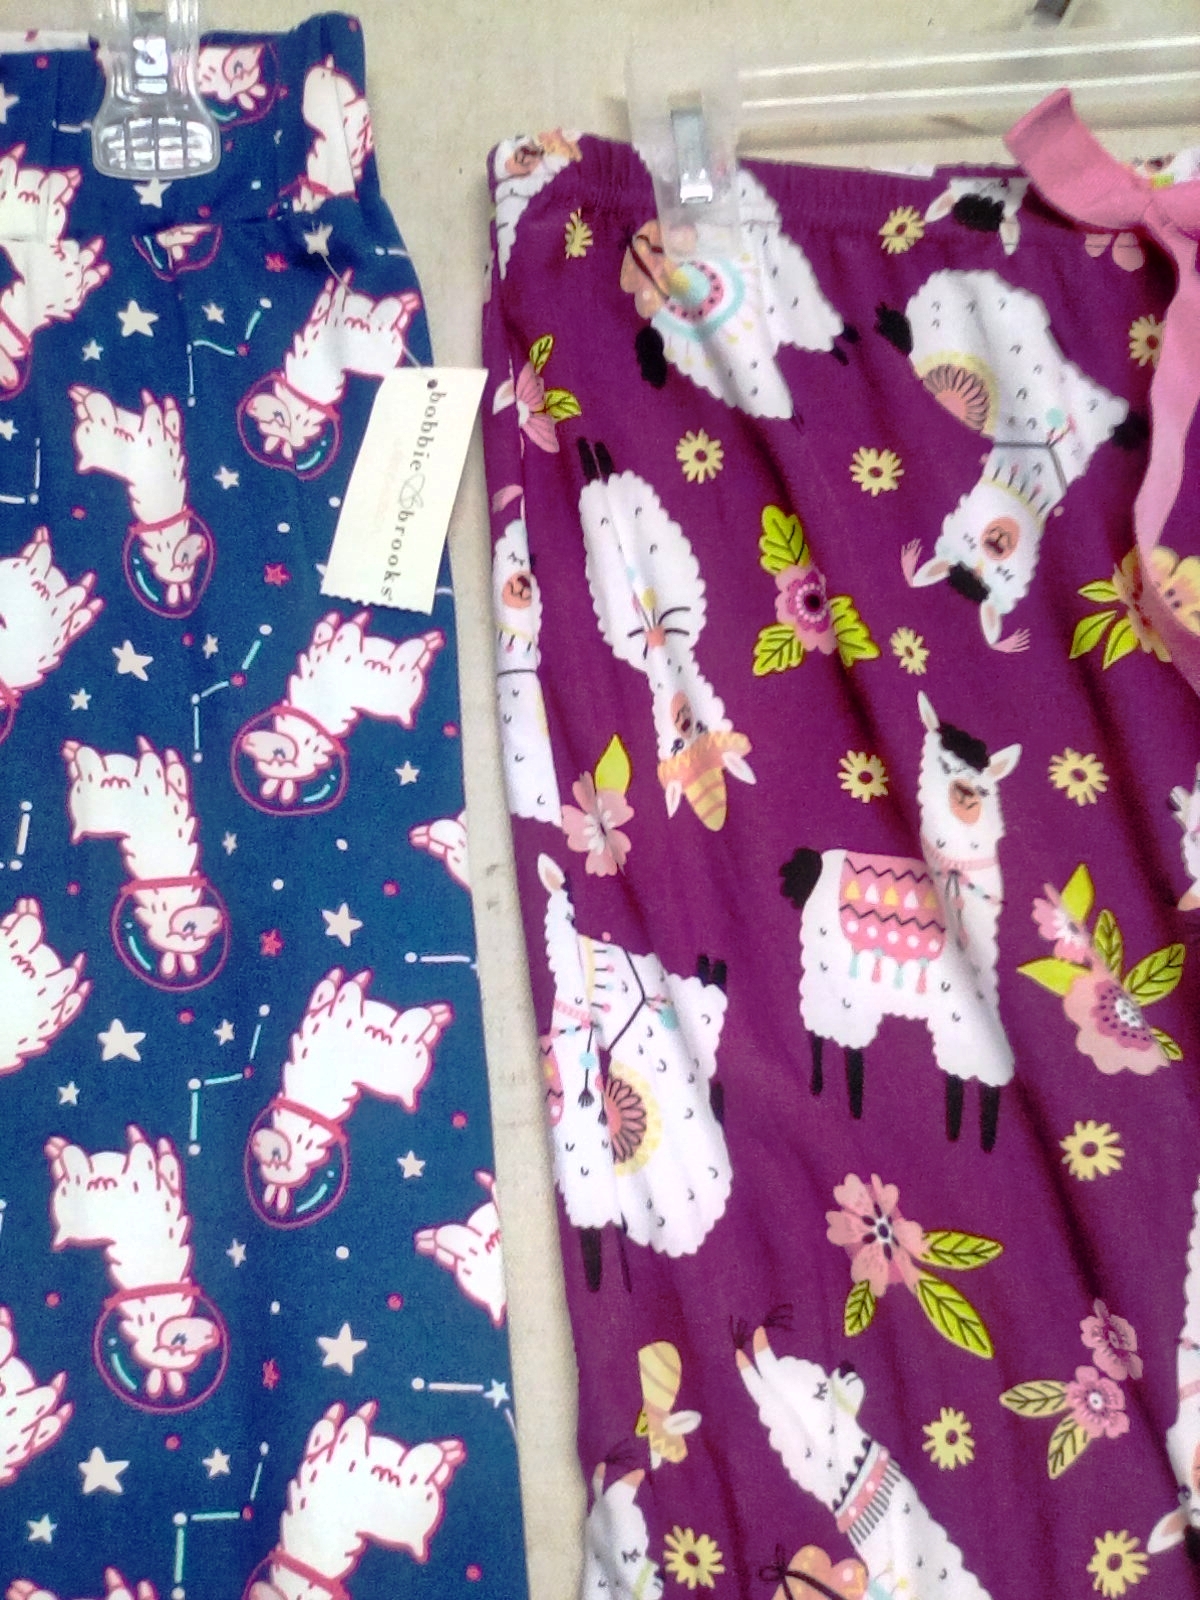 Bobbie Brooks Pajama Pants for Women for sale